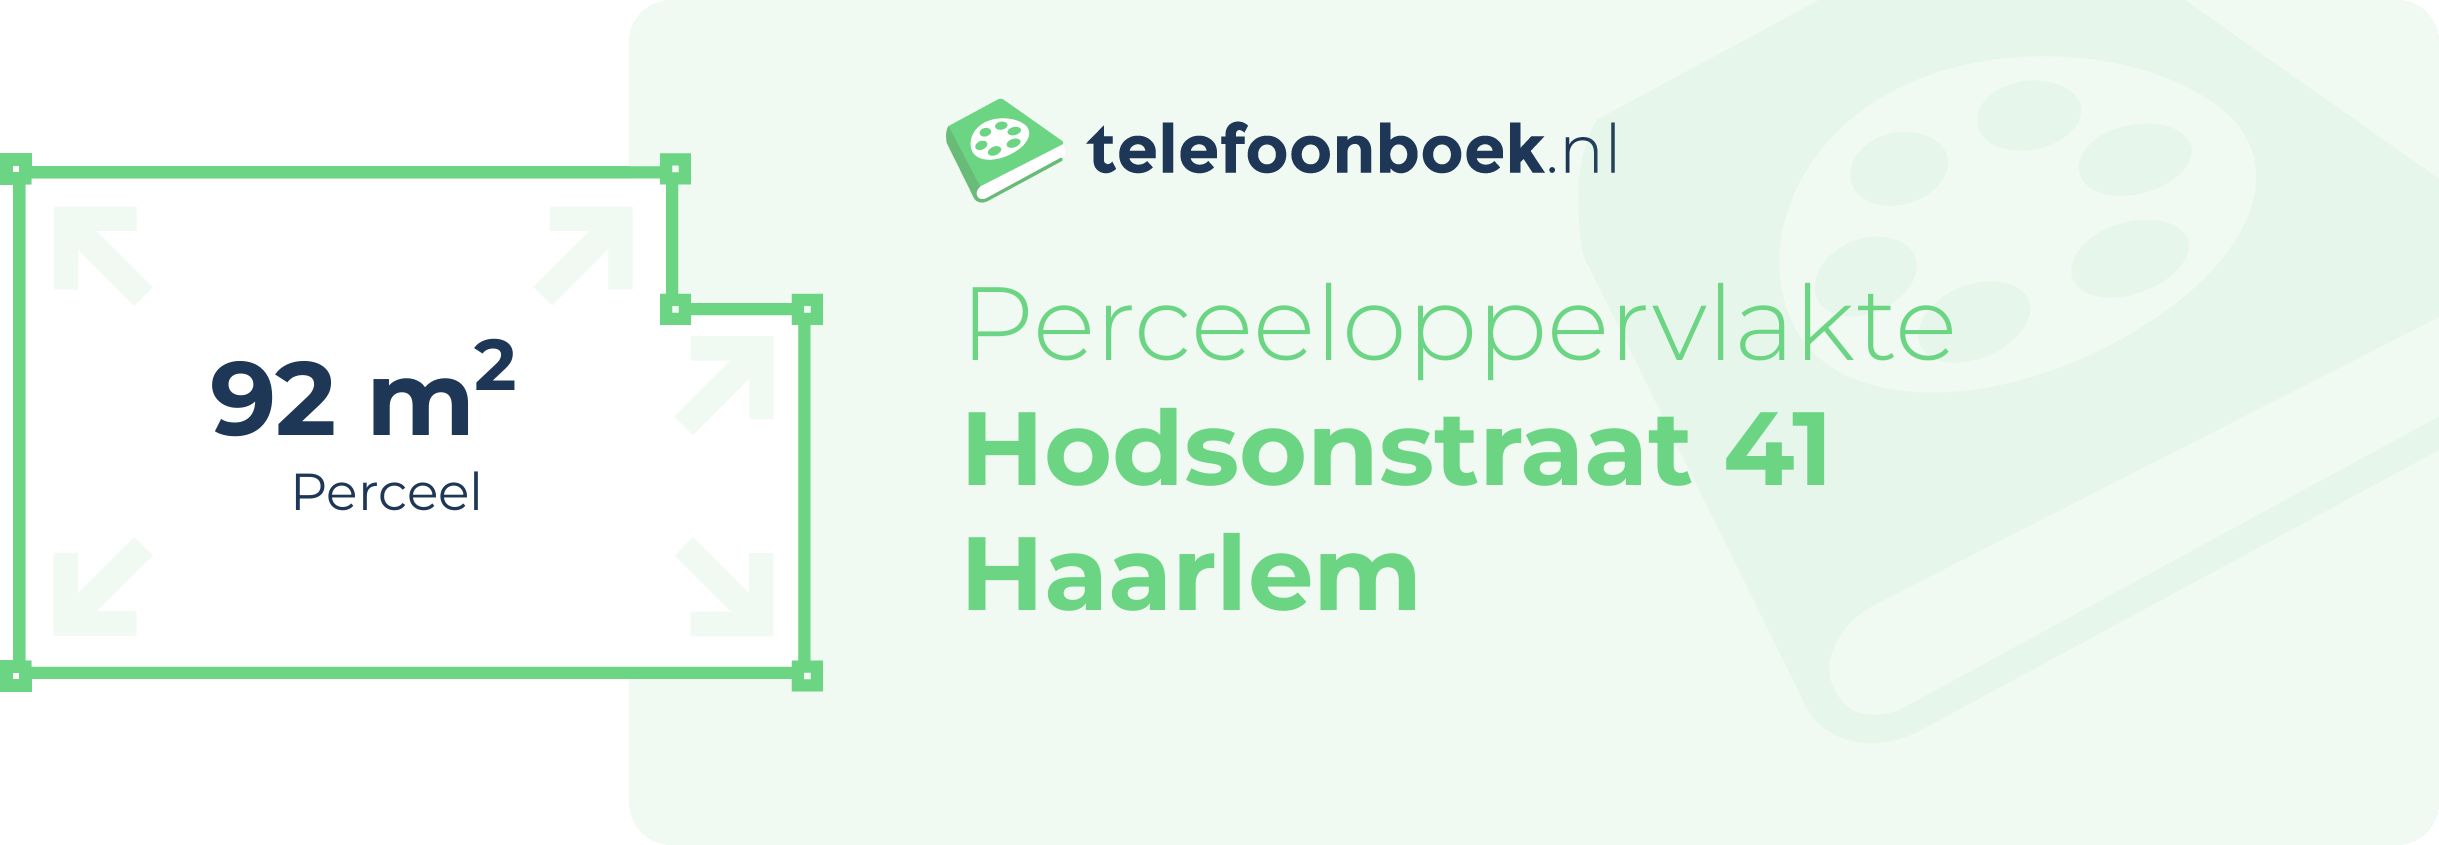 Perceeloppervlakte Hodsonstraat 41 Haarlem